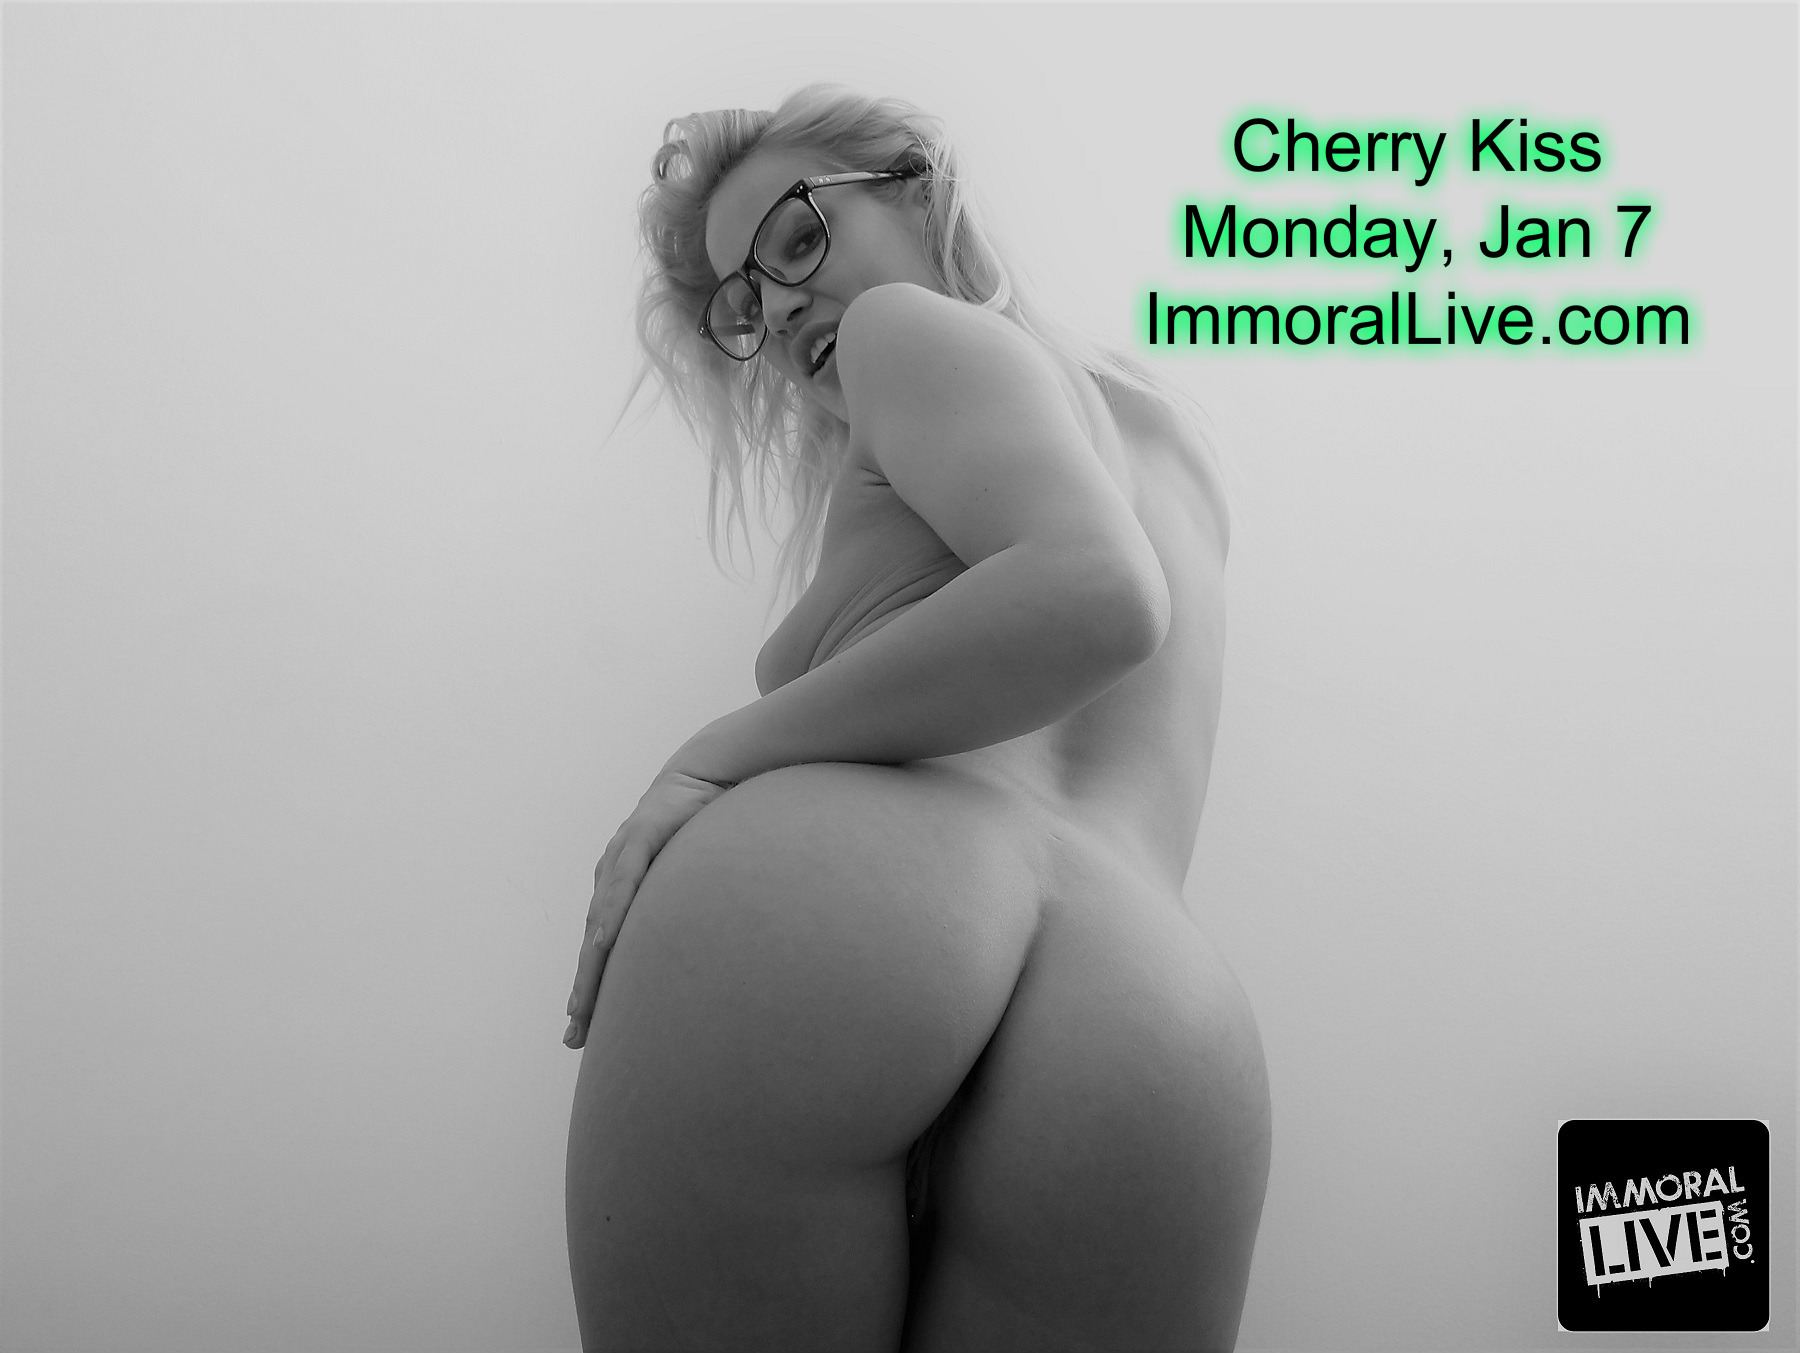 Cherry Kiss Immoral Live (8).jpg